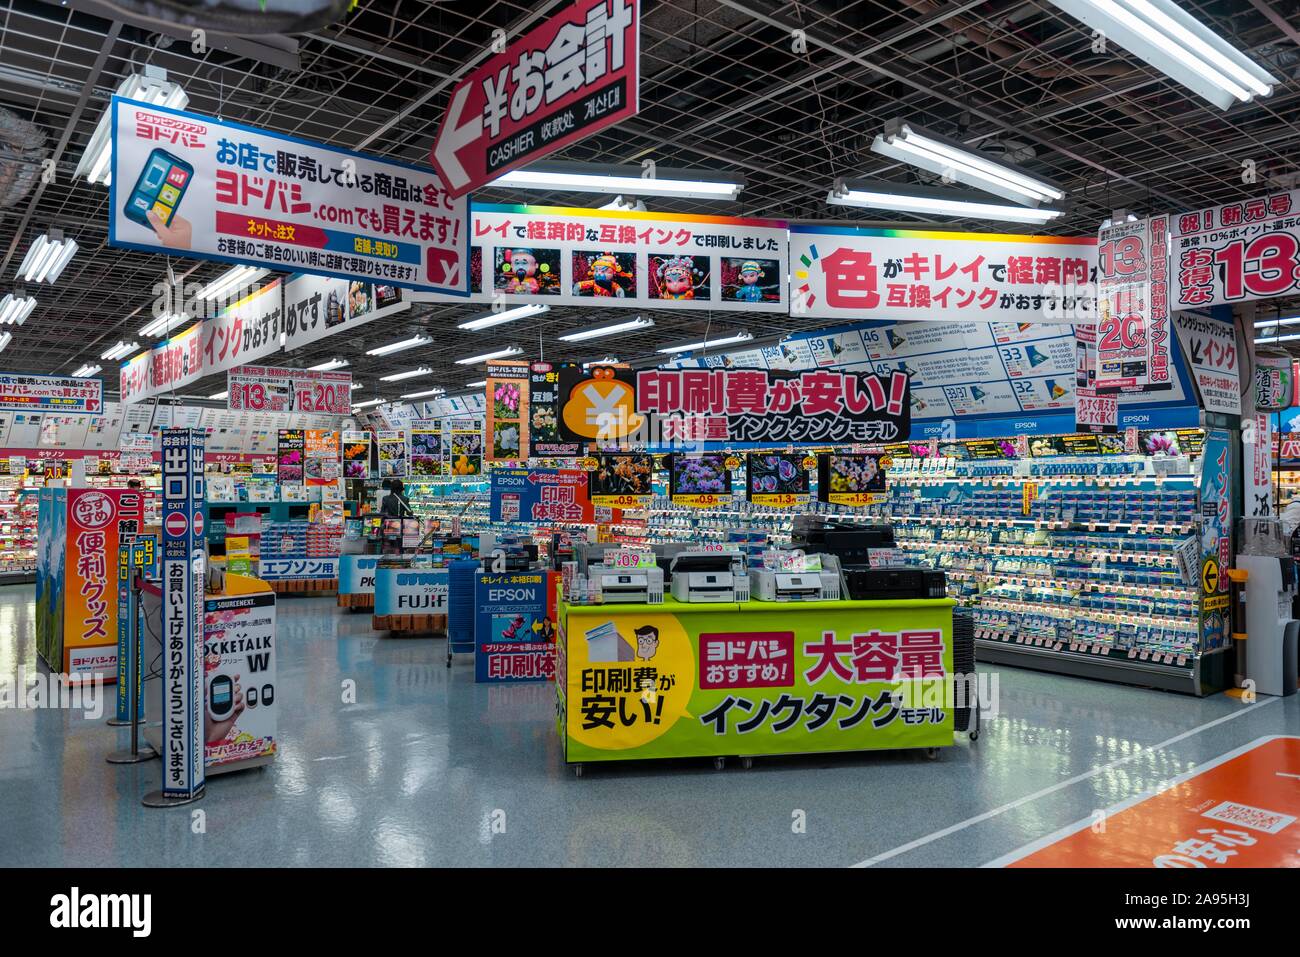 Electronics store, Yodobashi Camera Multimedia AKIBA, Akihabara, Electric Town, Tokyo, Japan Stock Photo